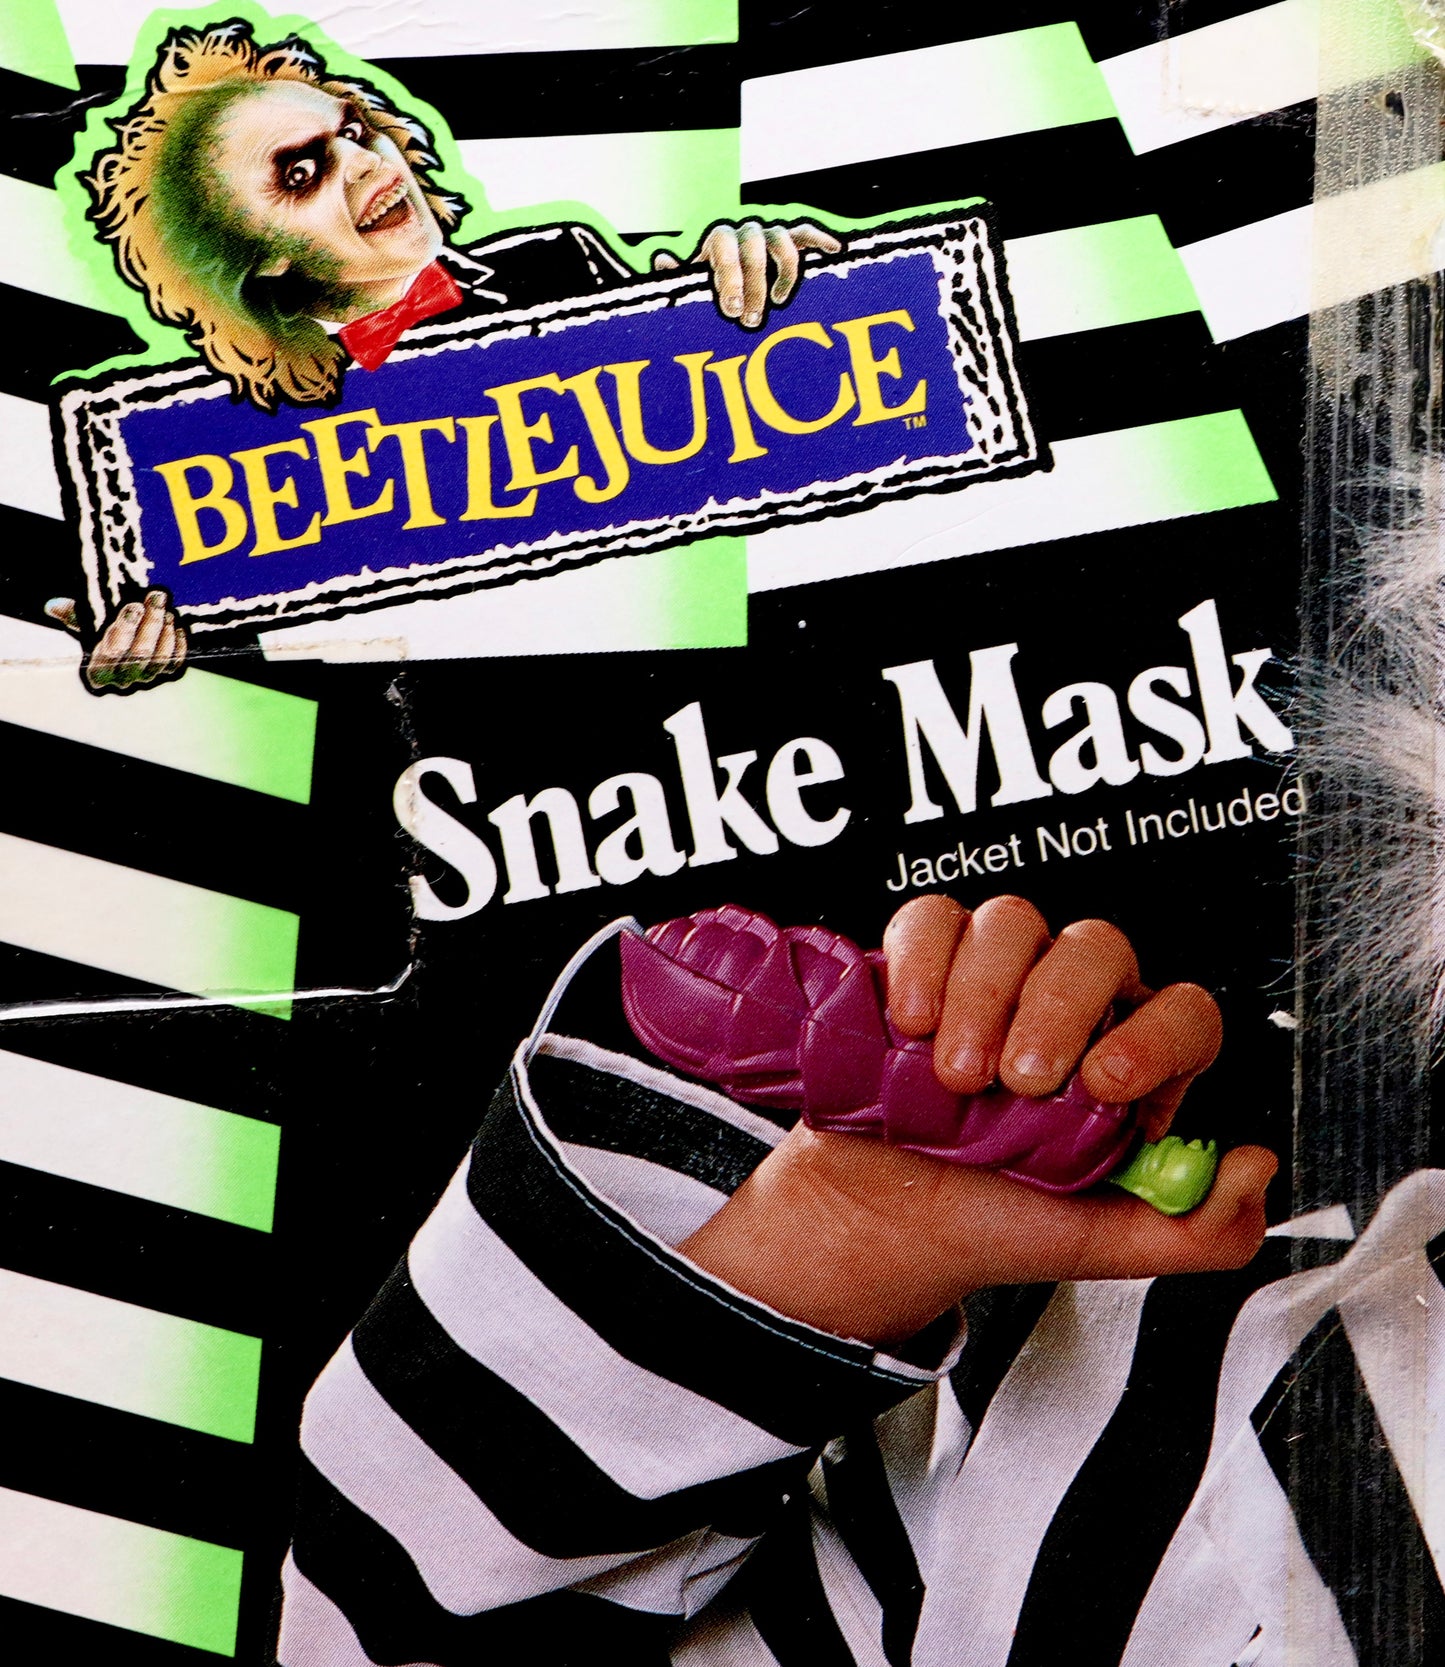 Vintage Beetlejuice Snake Mask in Original Packaging with the Original Seal